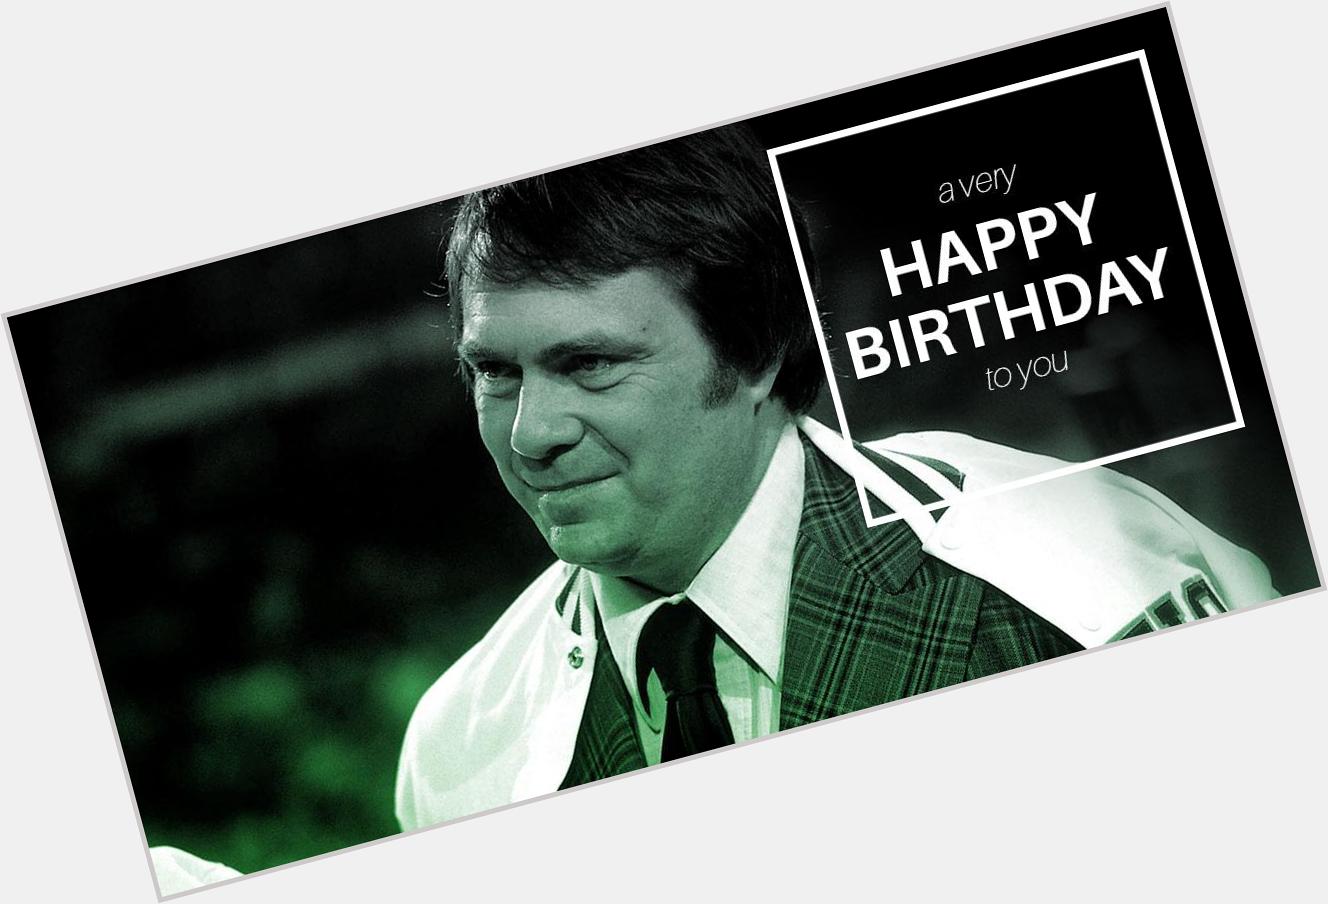 Wishing a very happy birthday to Tom Heinsohn, Hall of Famer and Players Association trailblazer. 